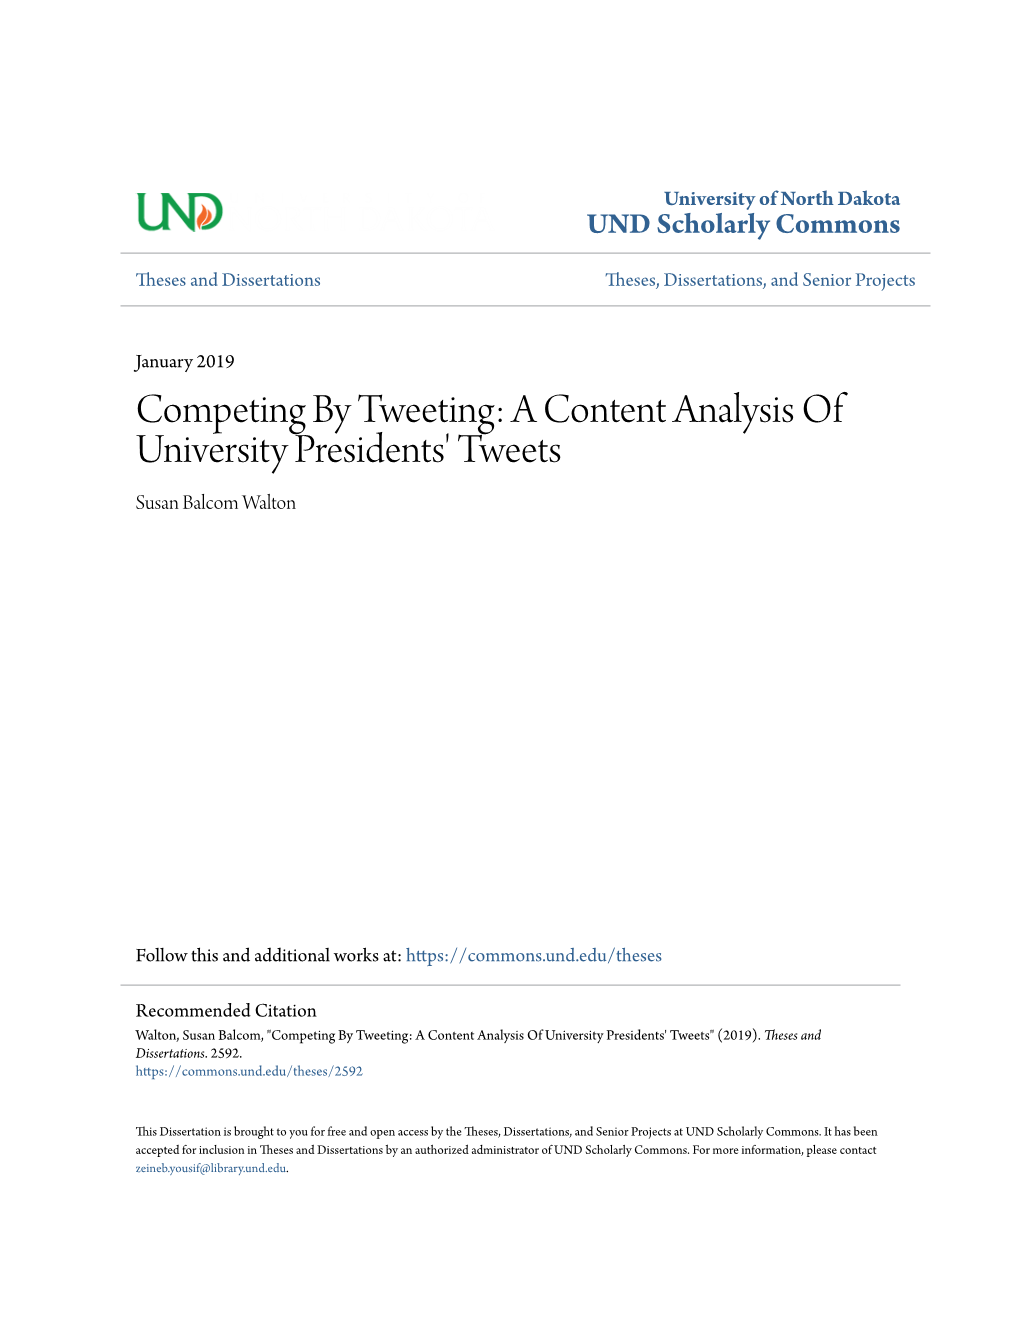 A Content Analysis of University Presidents' Tweets Susan Balcom Walton